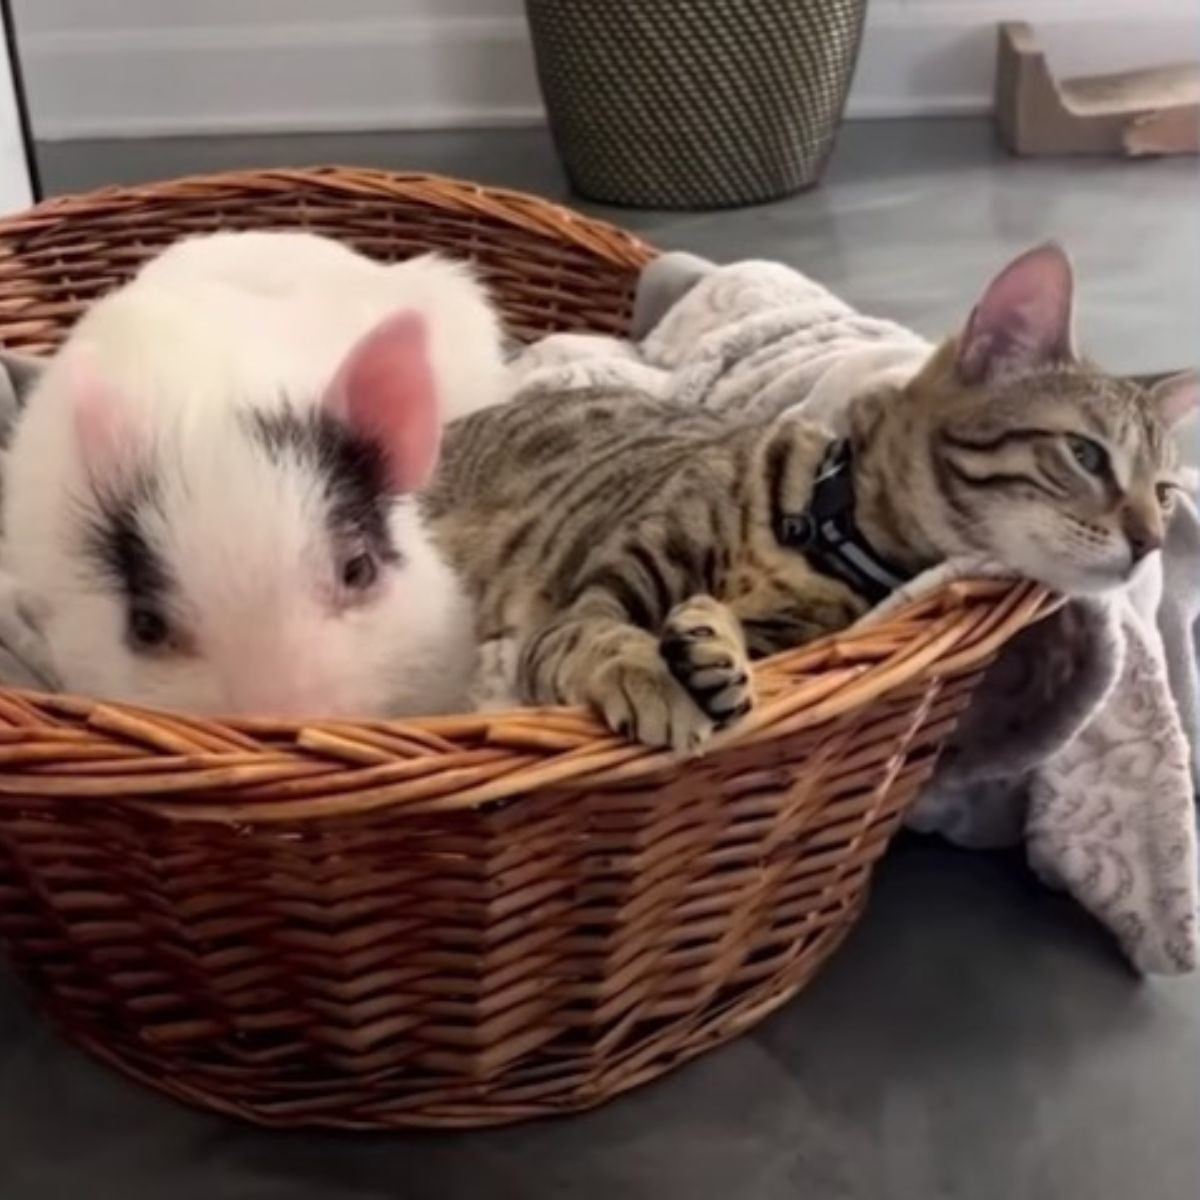 kitten and piglet lying in wooden basket